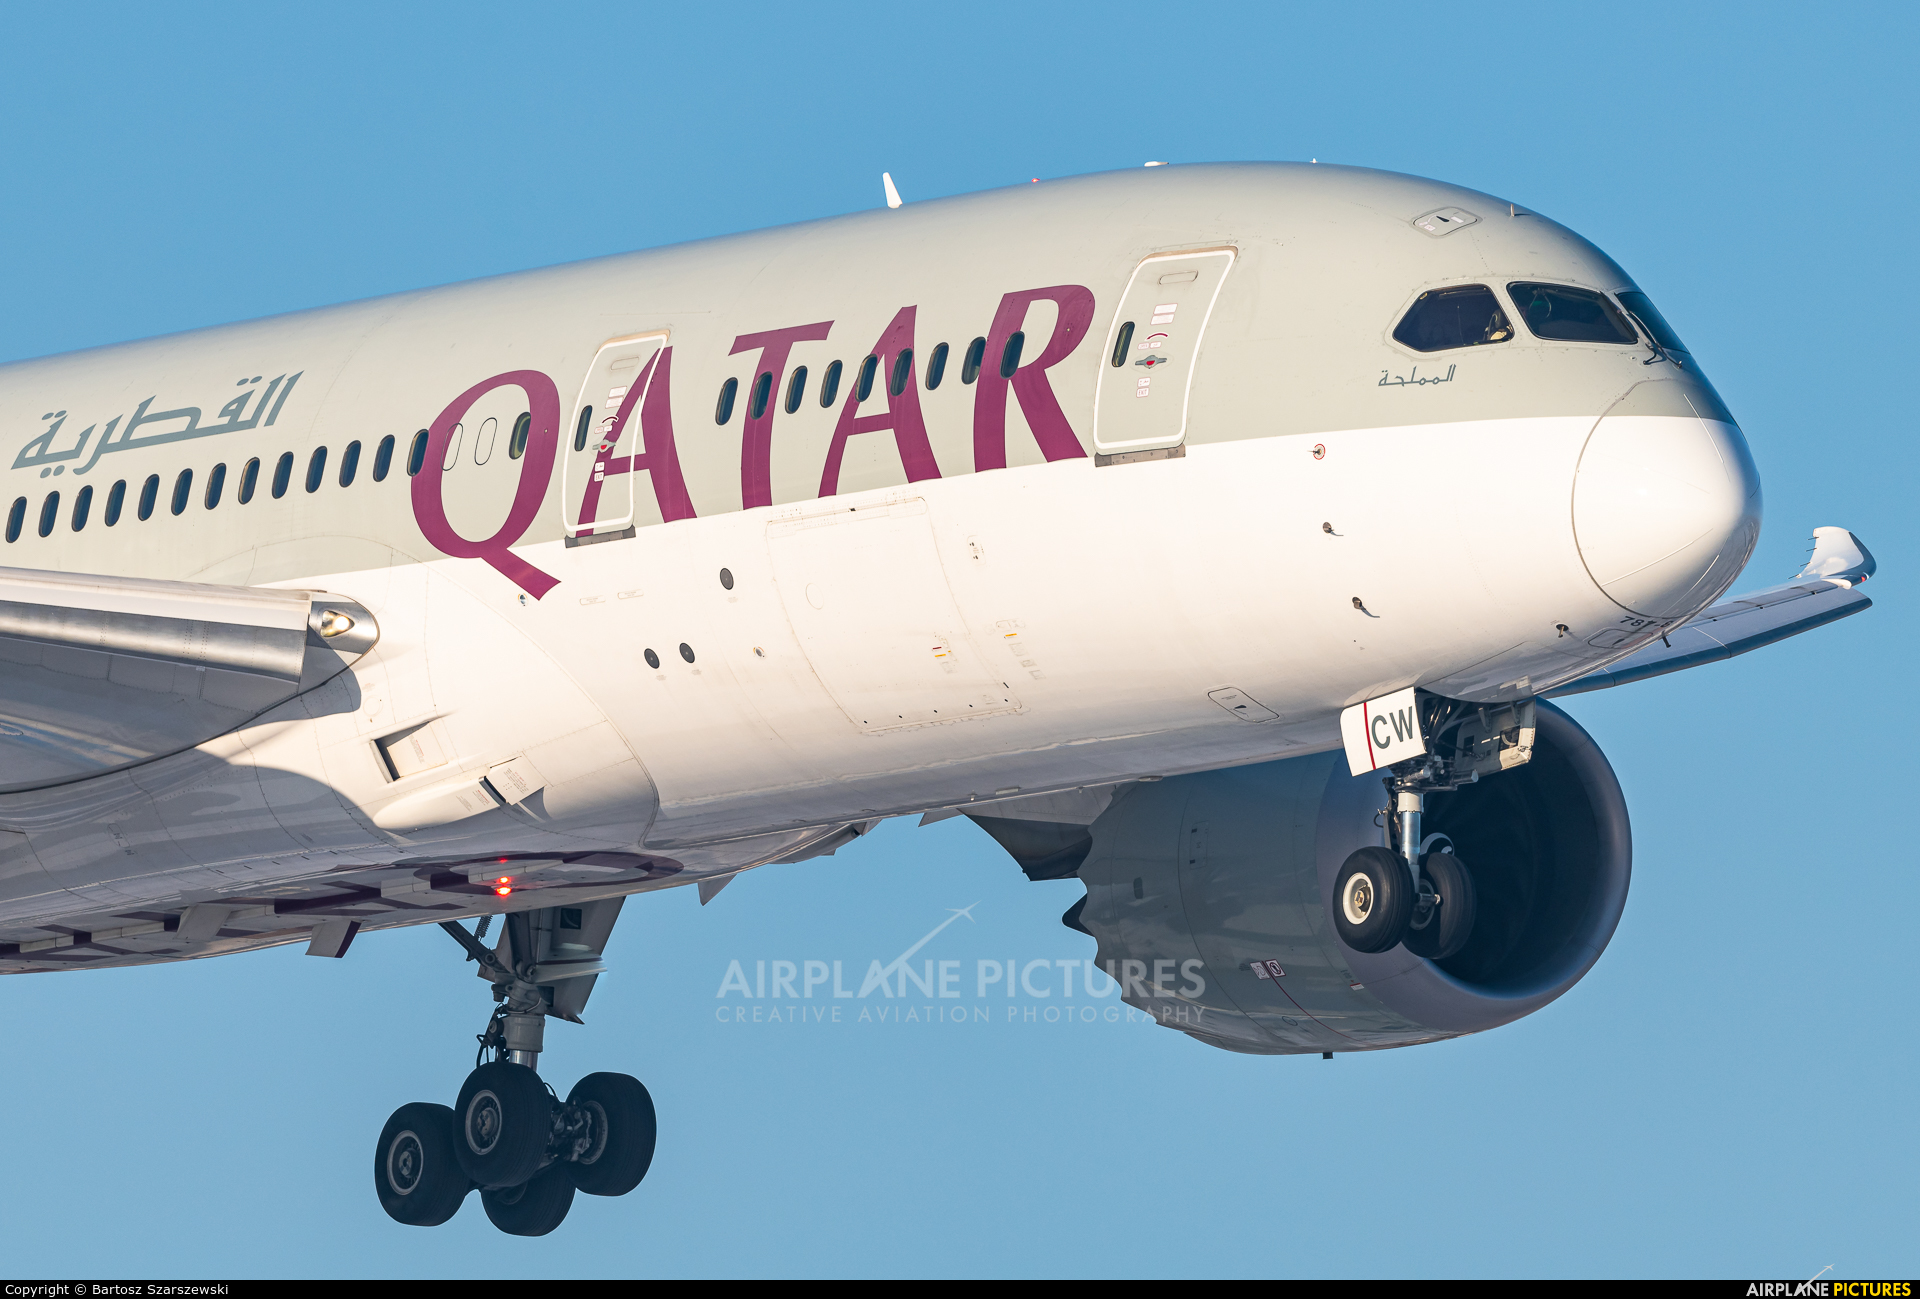 Qatar Airways A7-BCW aircraft at Warsaw - Frederic Chopin